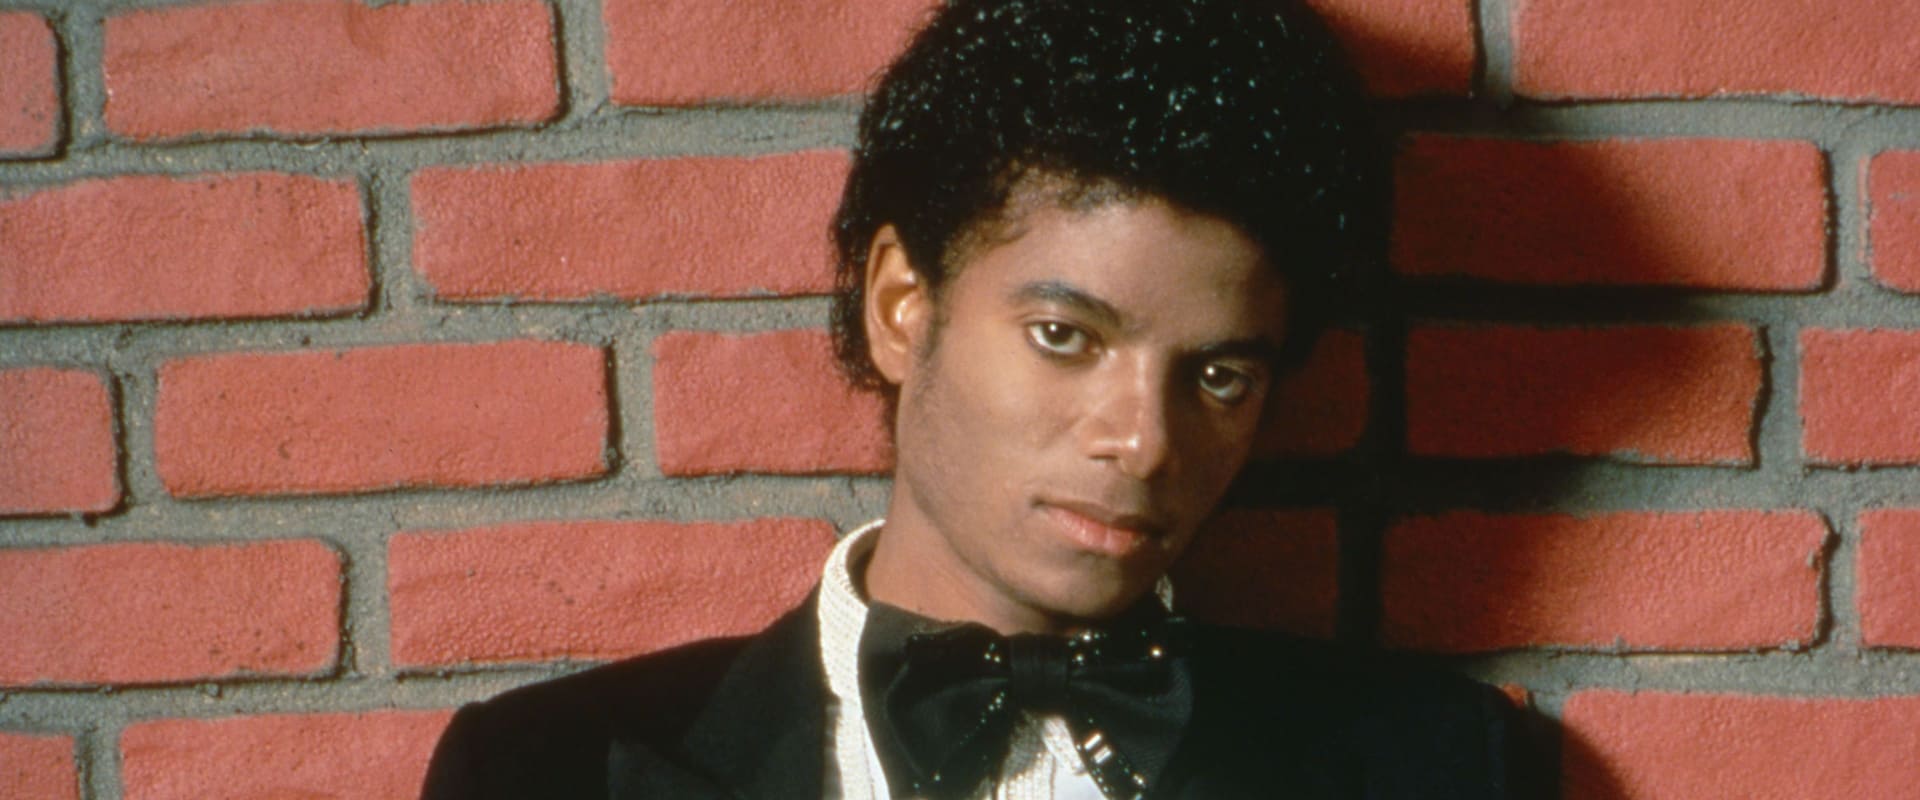 Michael Jackson. De la Motown a Off the Wall